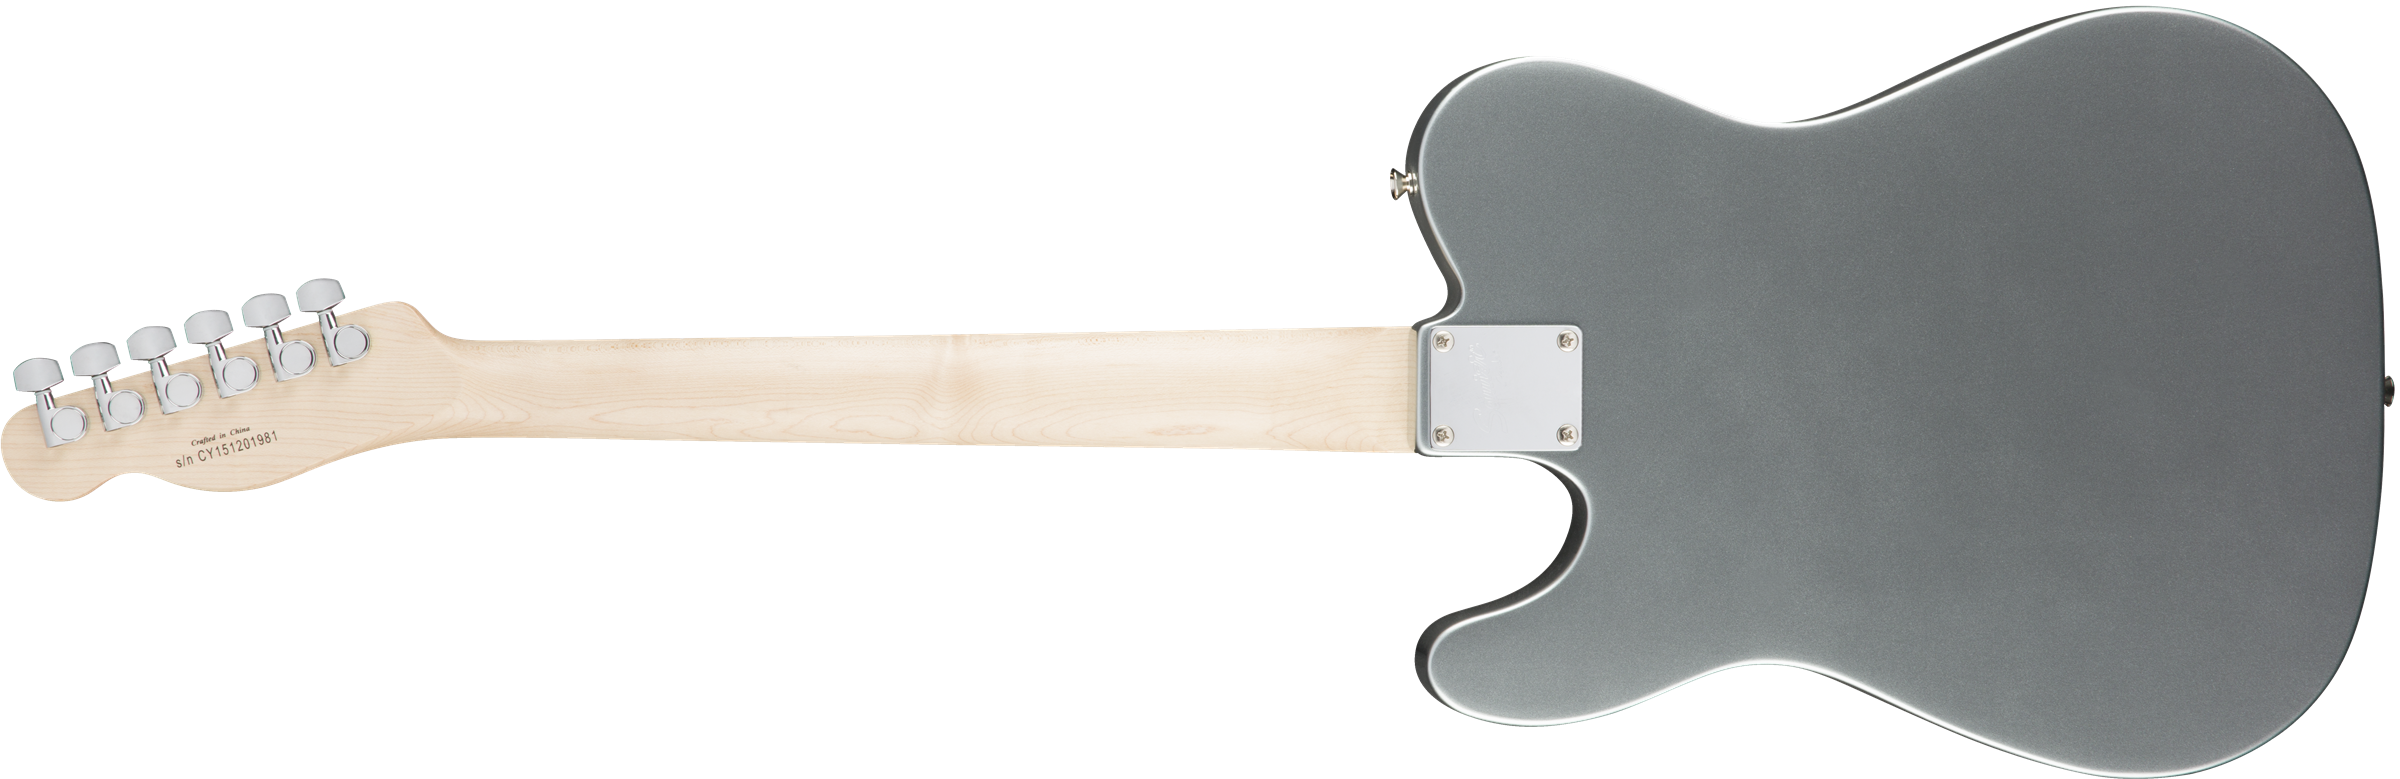 Squier Tele Affinity Series 2019 Lau - Slick Silver - Televorm elektrische gitaar - Variation 5